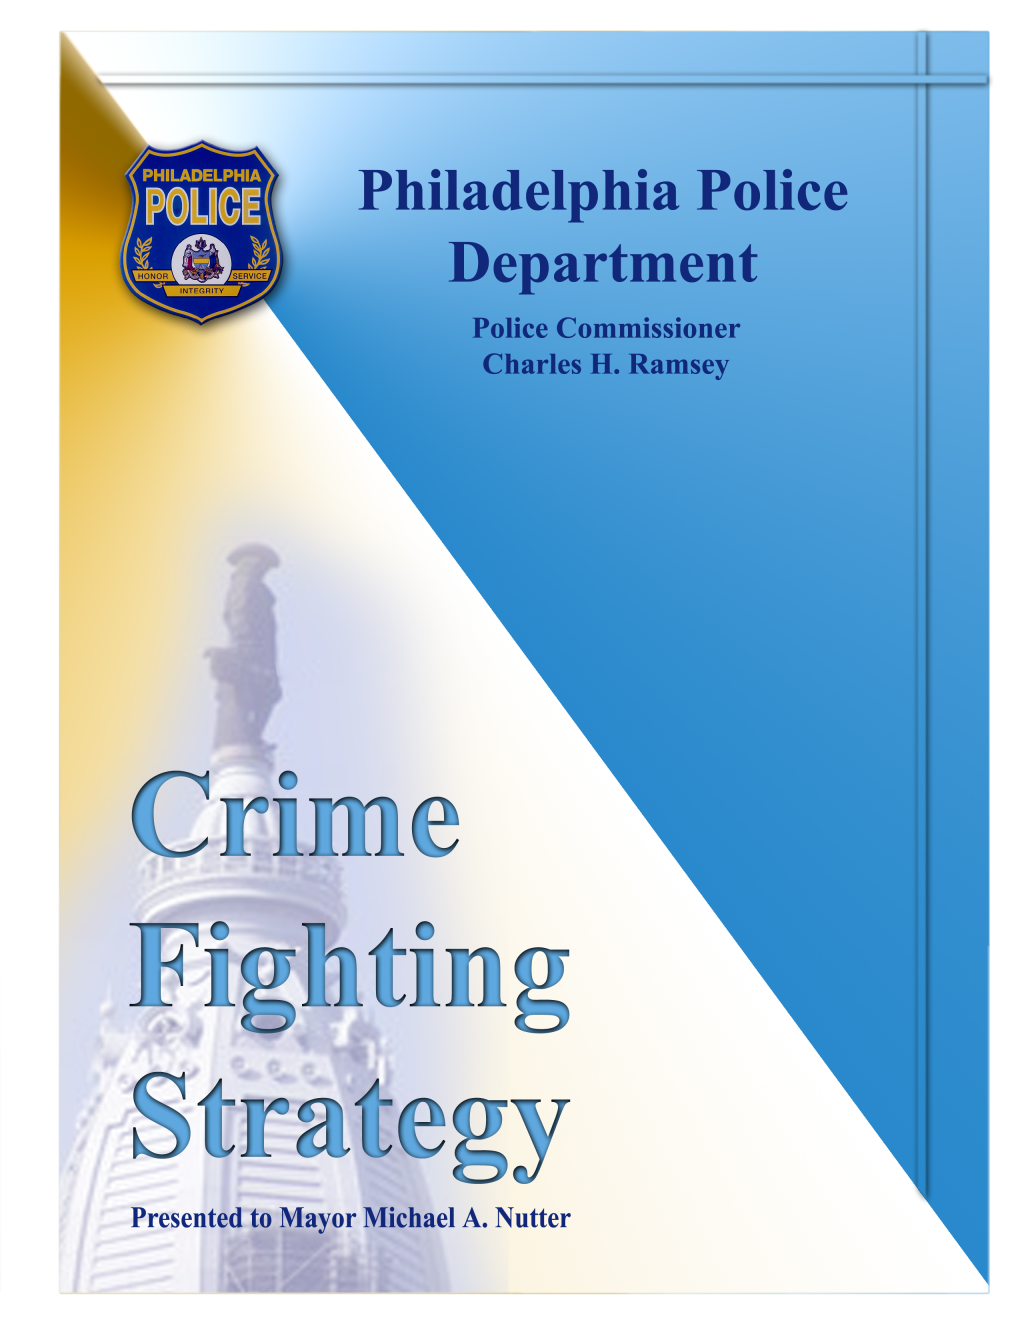 Philadelphia Police Department's Crime Fighting